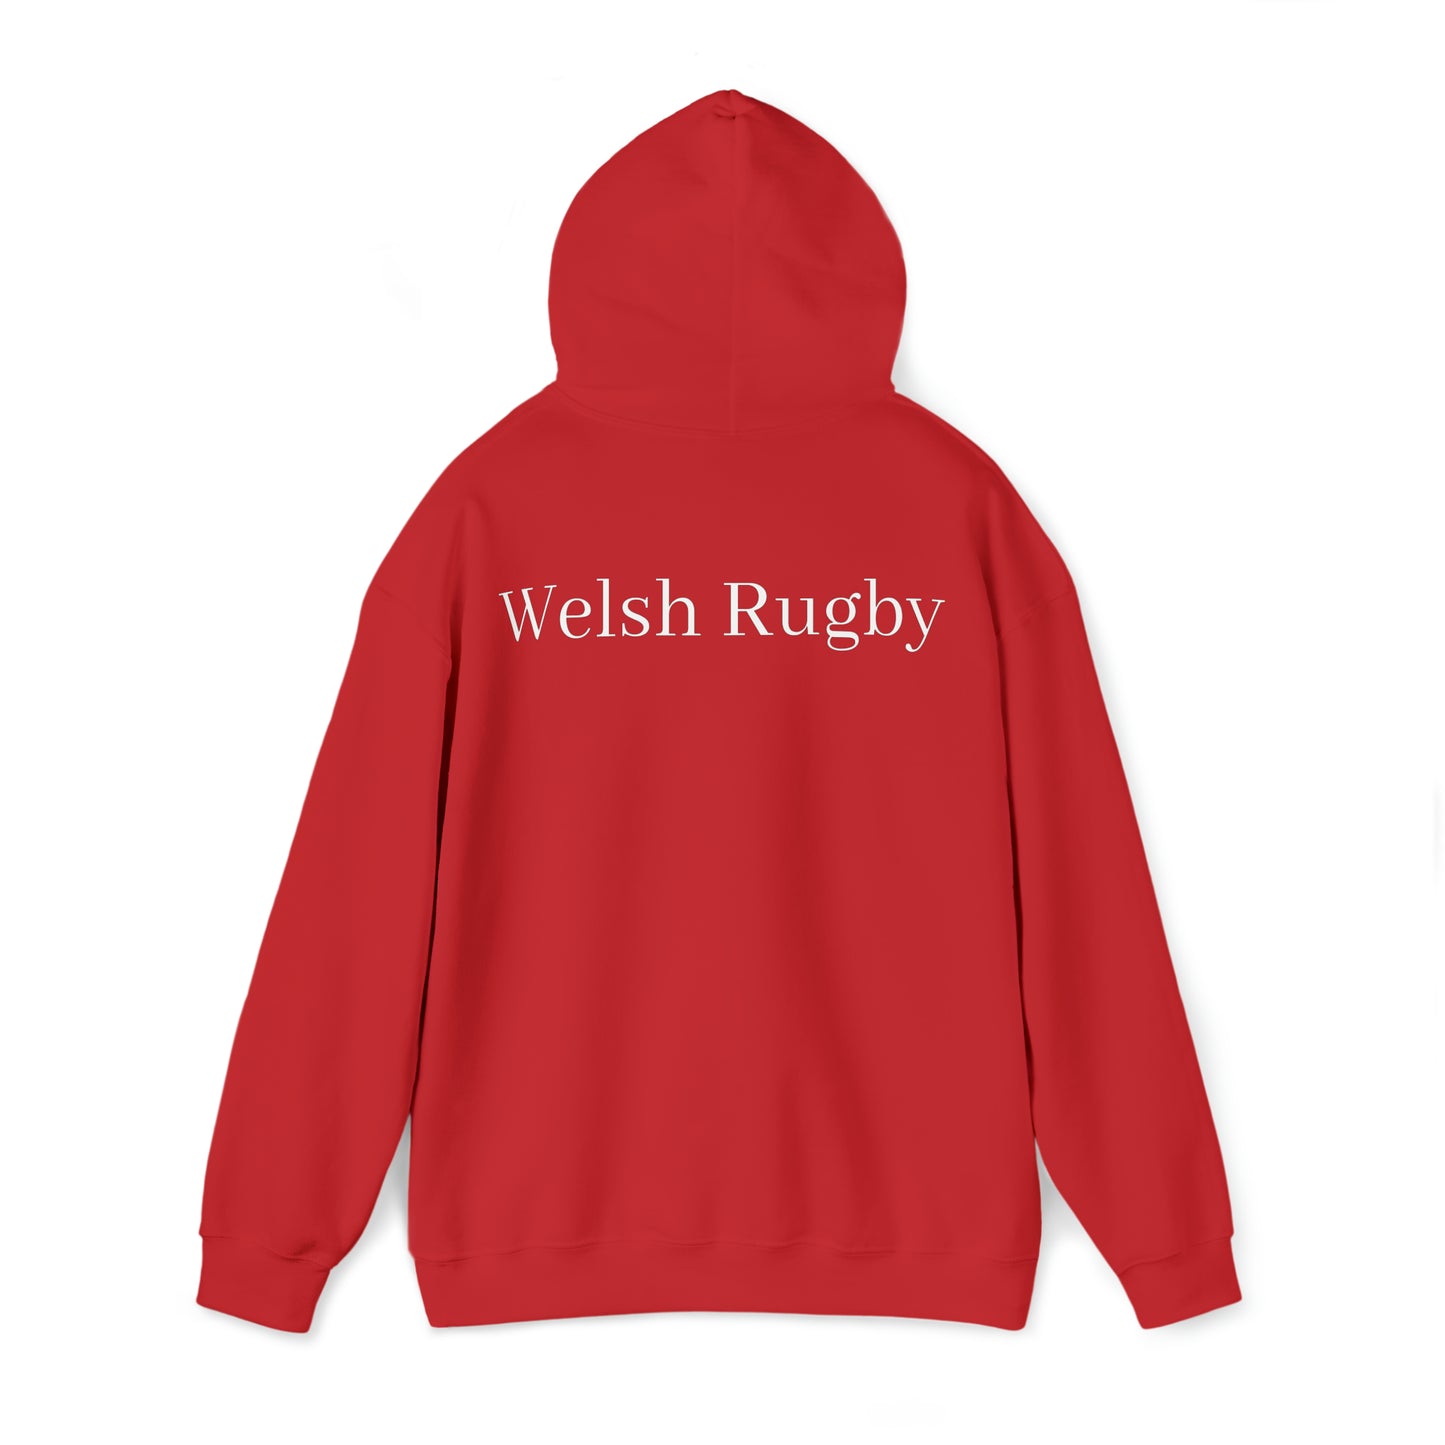 Post Match Wales - dark hoodies